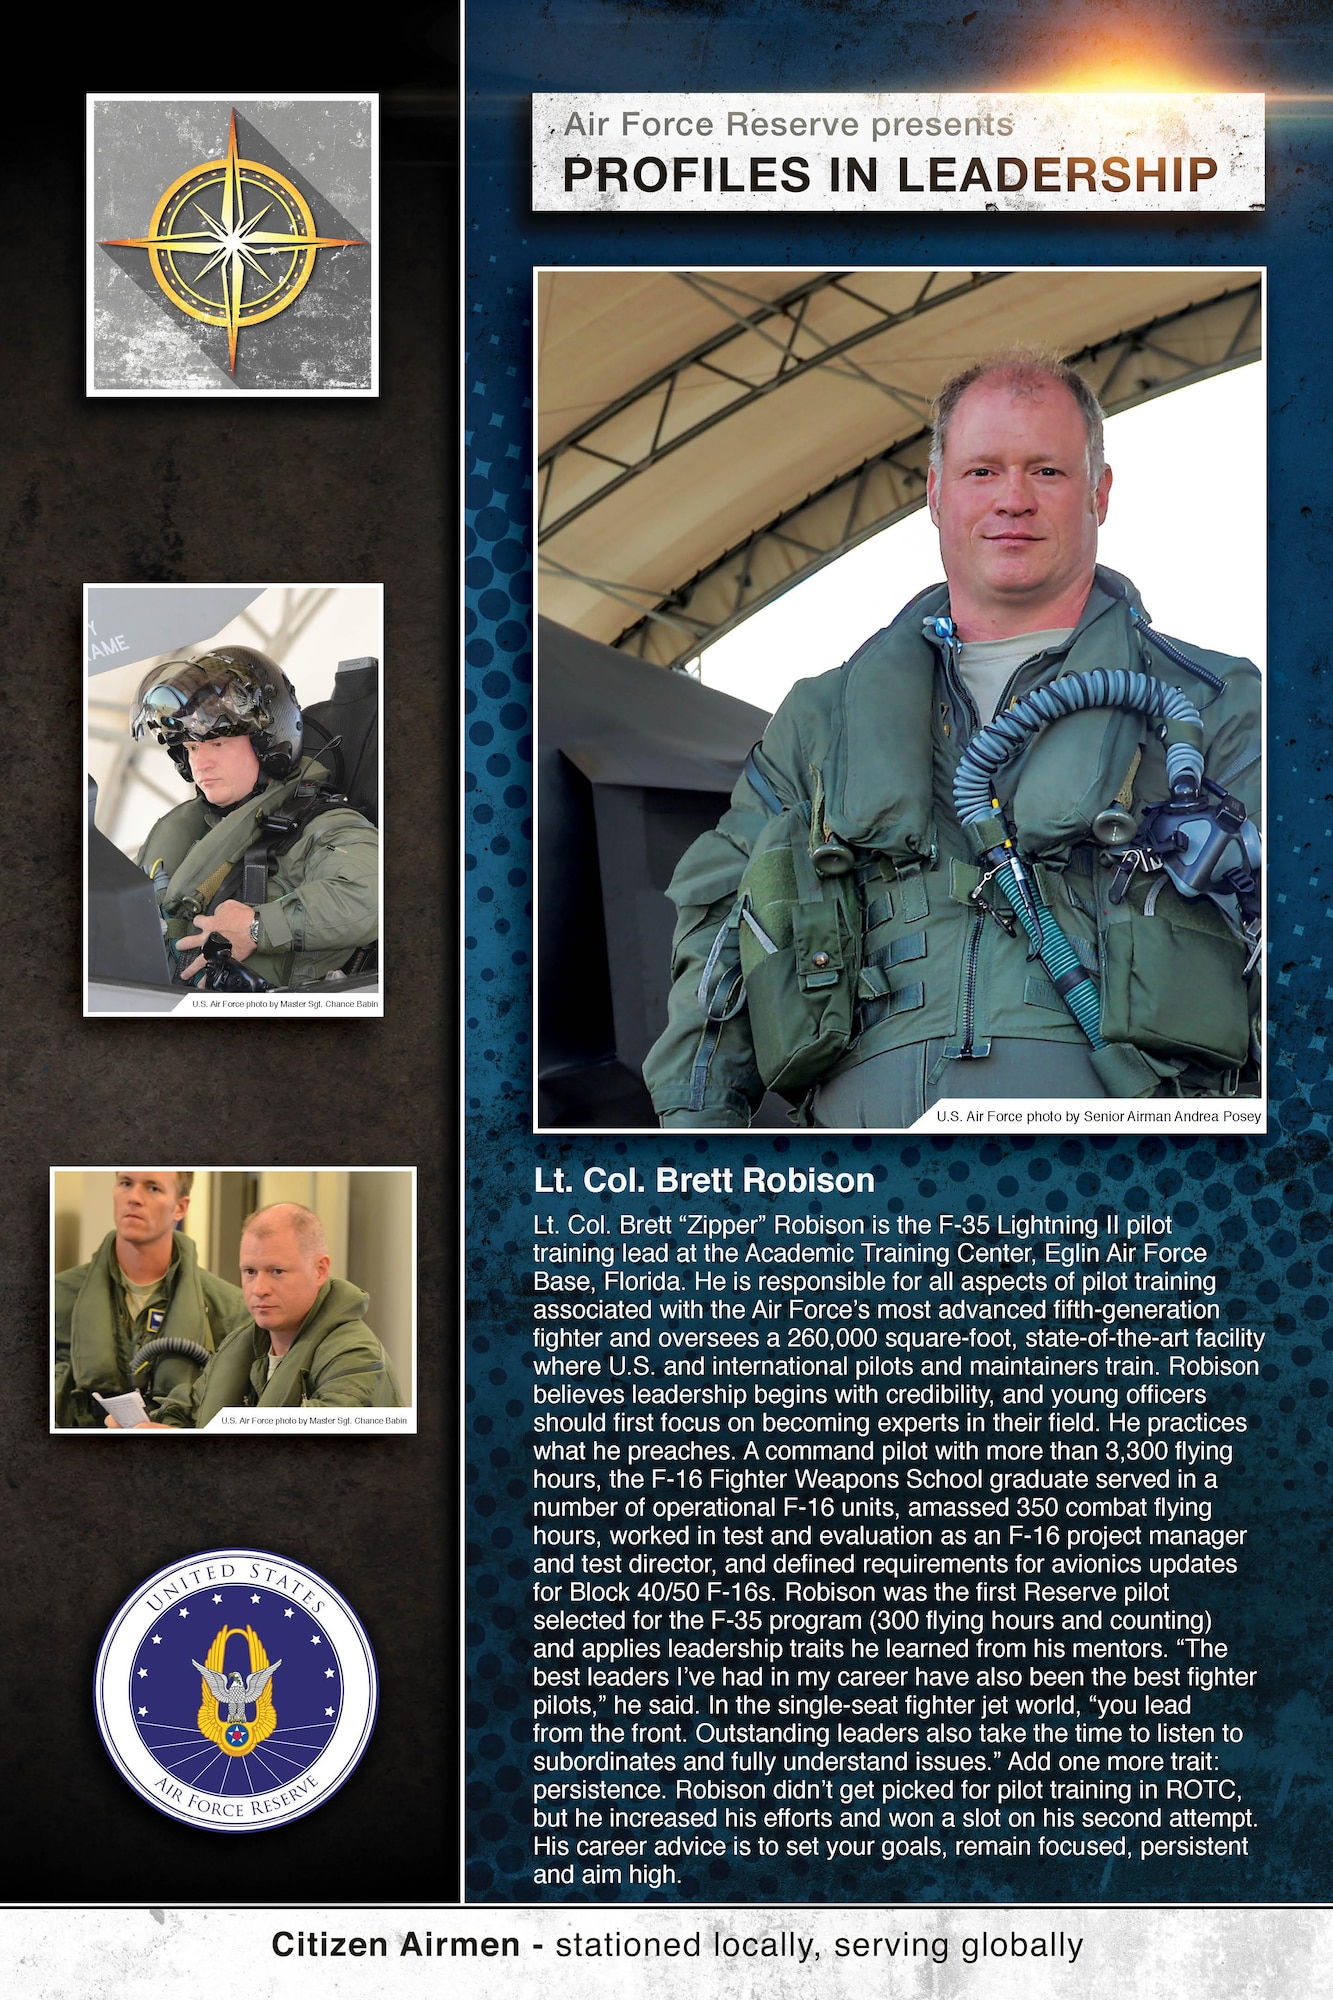 Lt Col Brett “Zipper” Robison, F-35 pilot training lead at the Academic Training Center, Eglin AFB